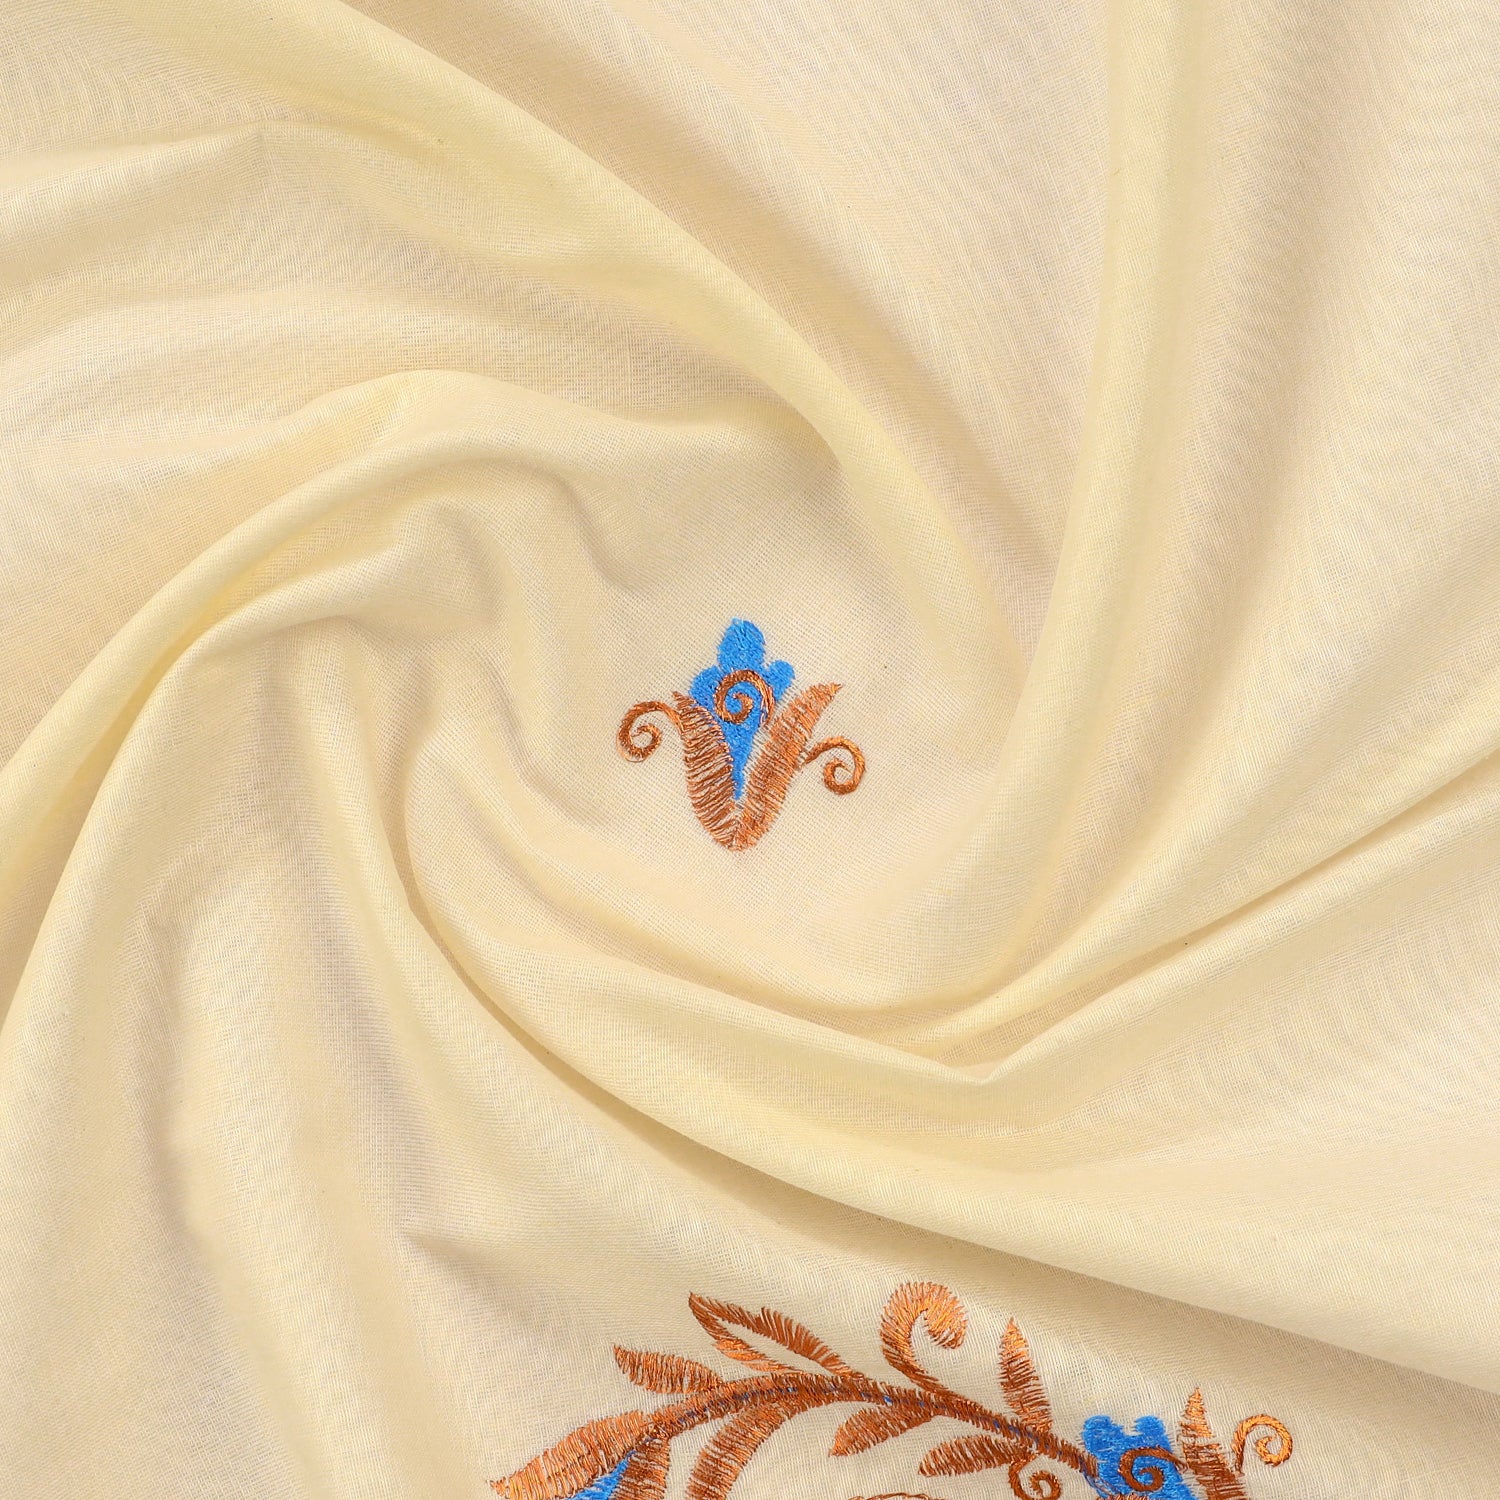 Kerala Embroidered Onam sarees